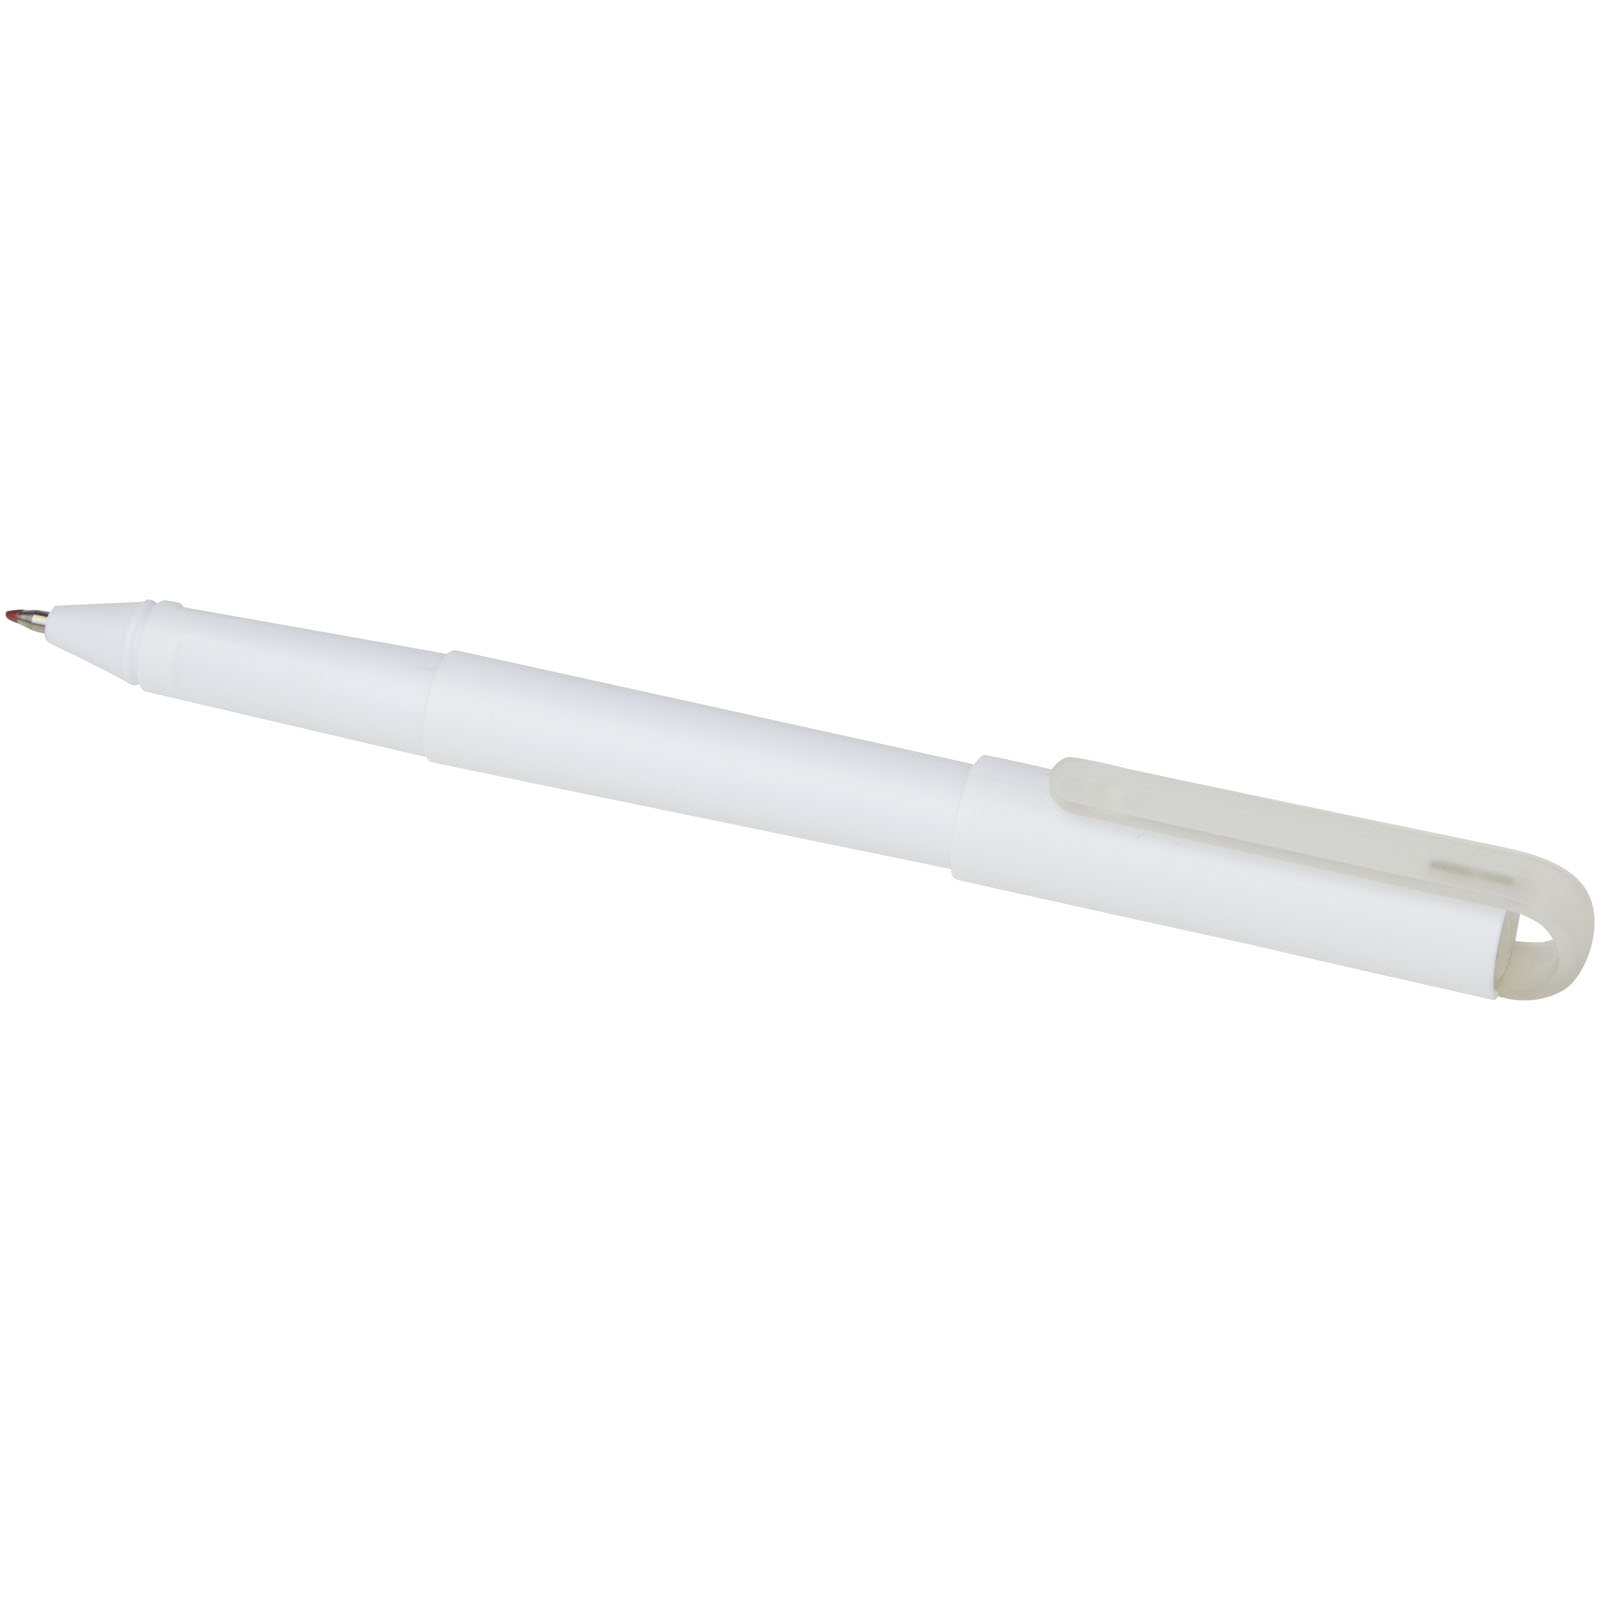 Advertising Ballpoint Pens - Mauna recycled PET gel ballpoint pen - 2